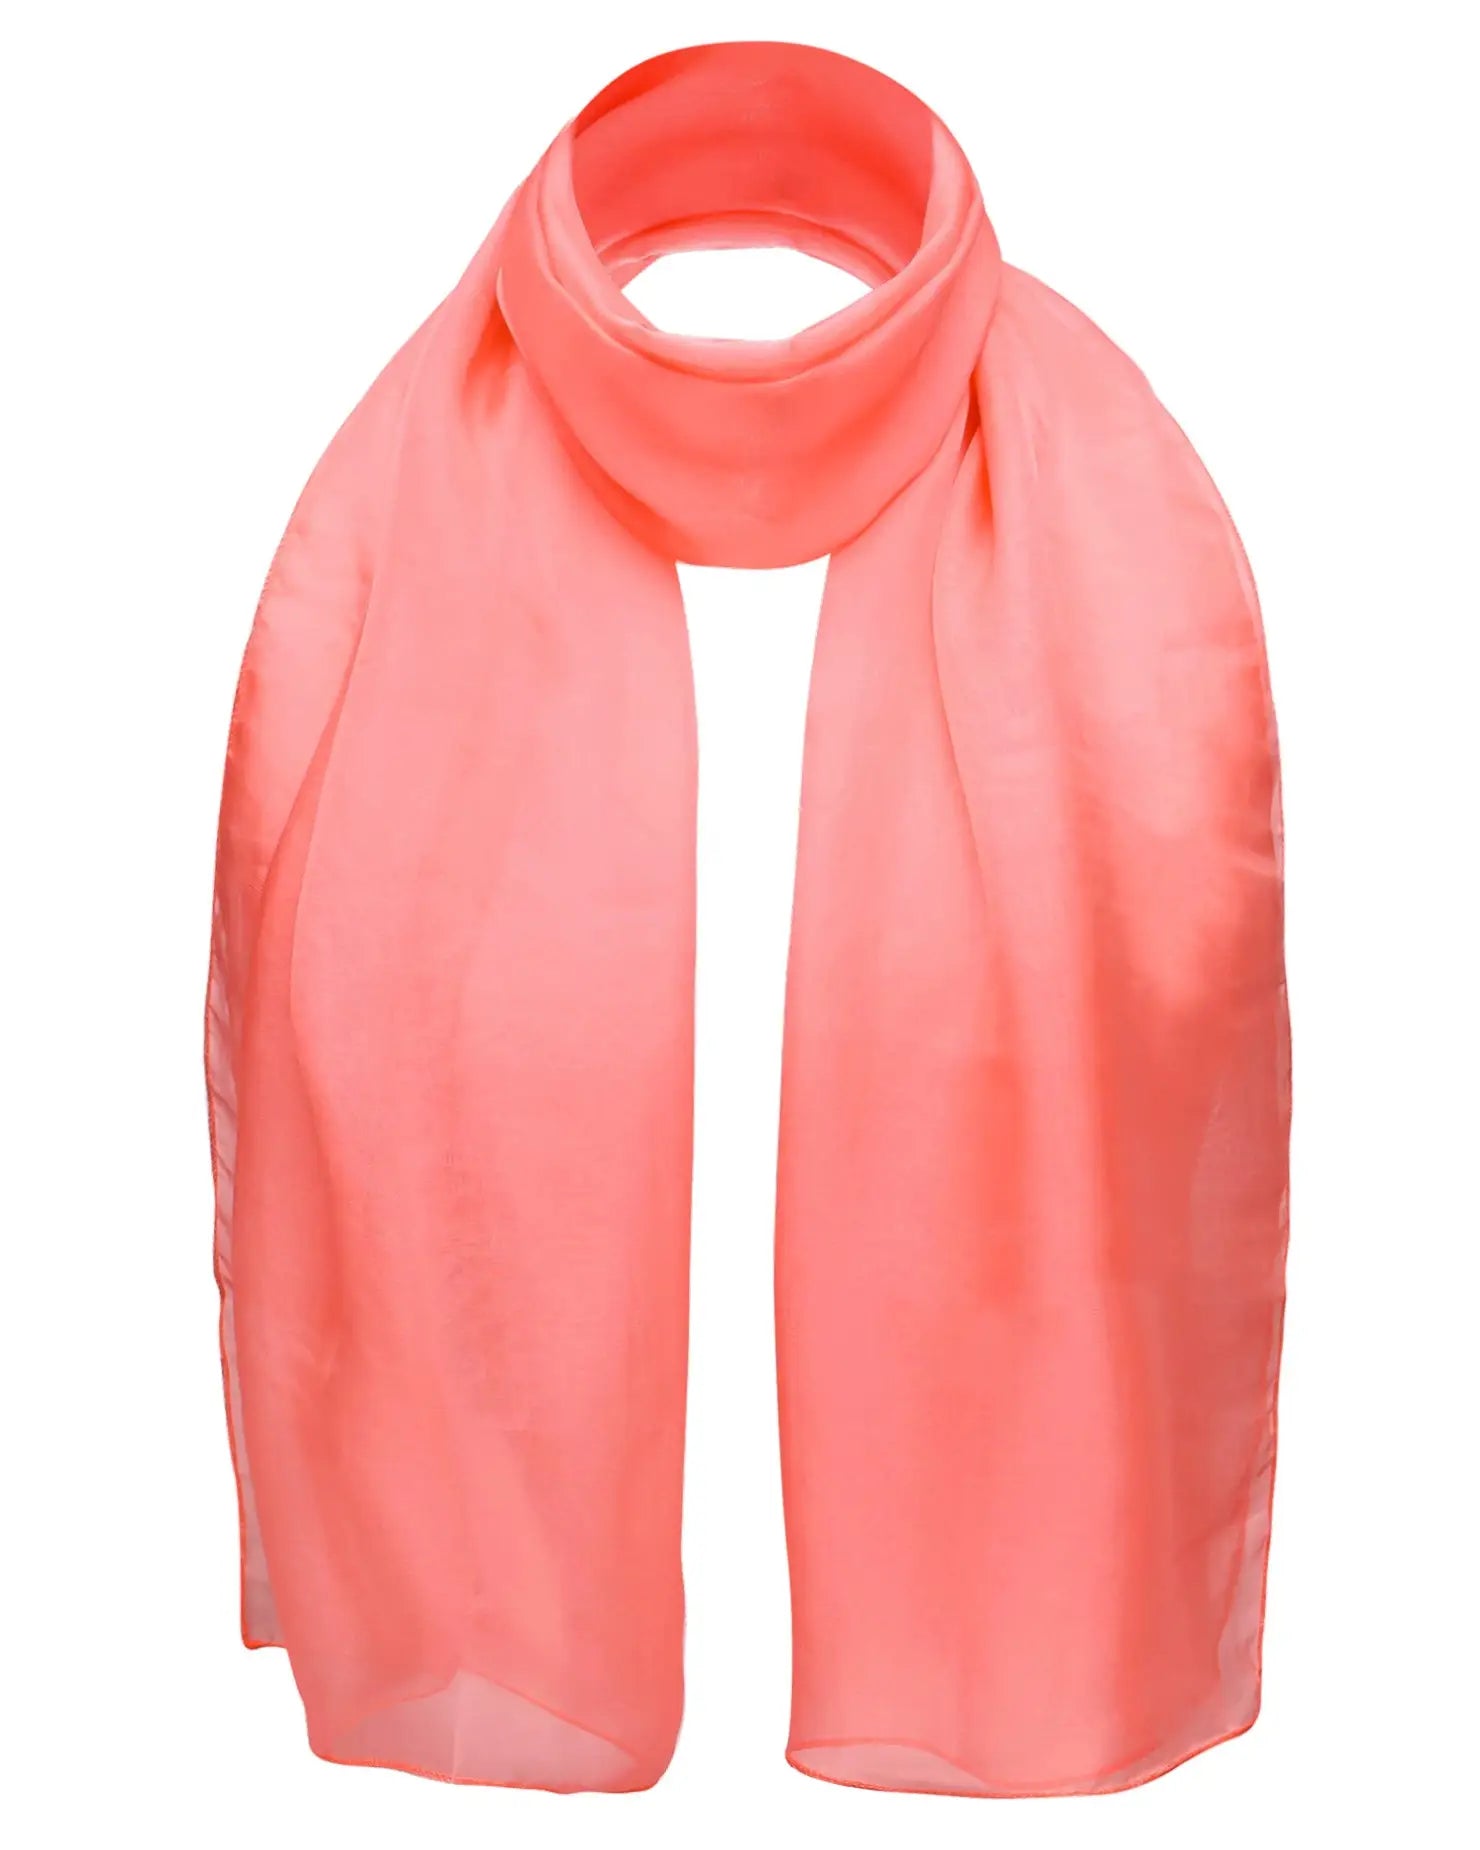 Luxurious Lightweight Chiffon Scarf: Classic Plain Coral Pink Design